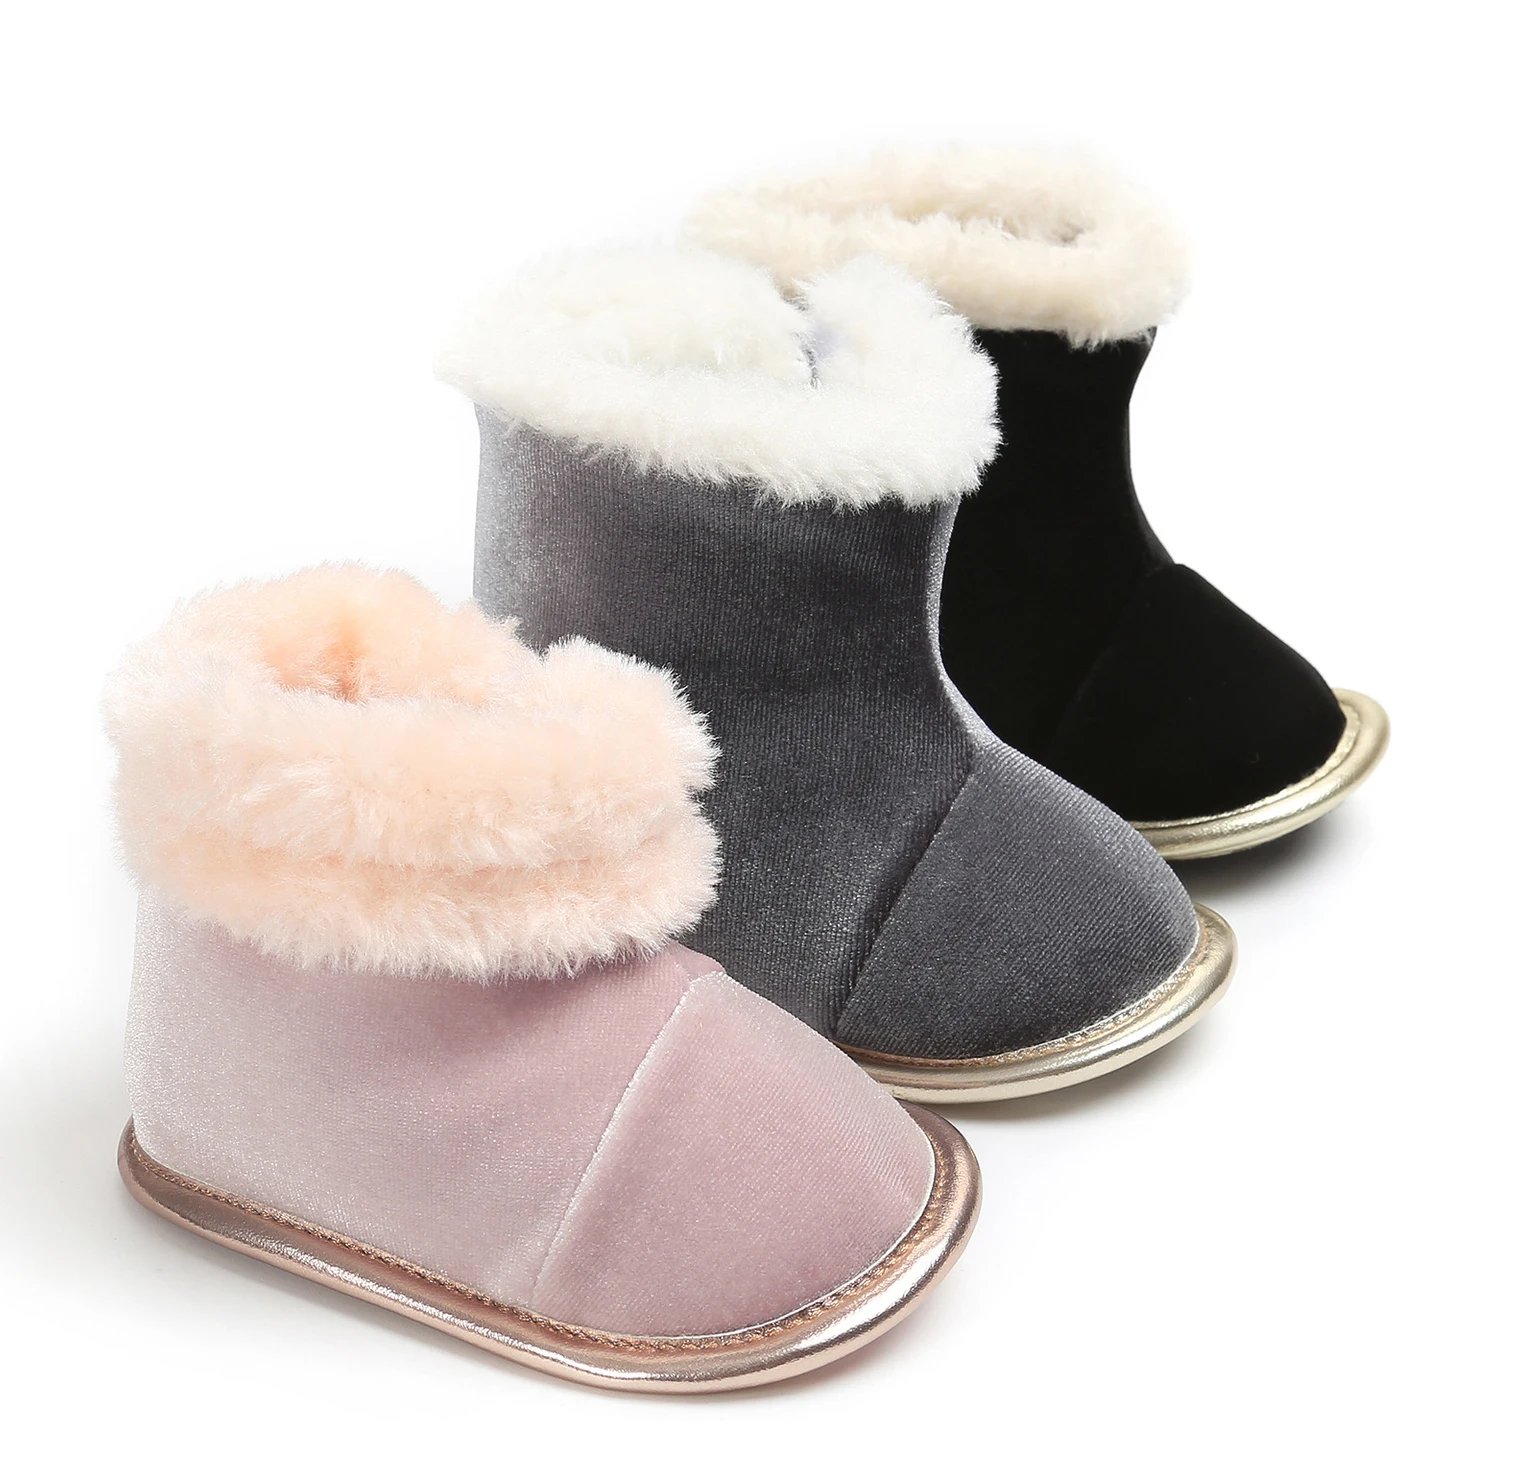 
Wholesale fashion winter Flannel upper Fur lining outdoor warm prewalker infant girl baby boots  (62240866252)